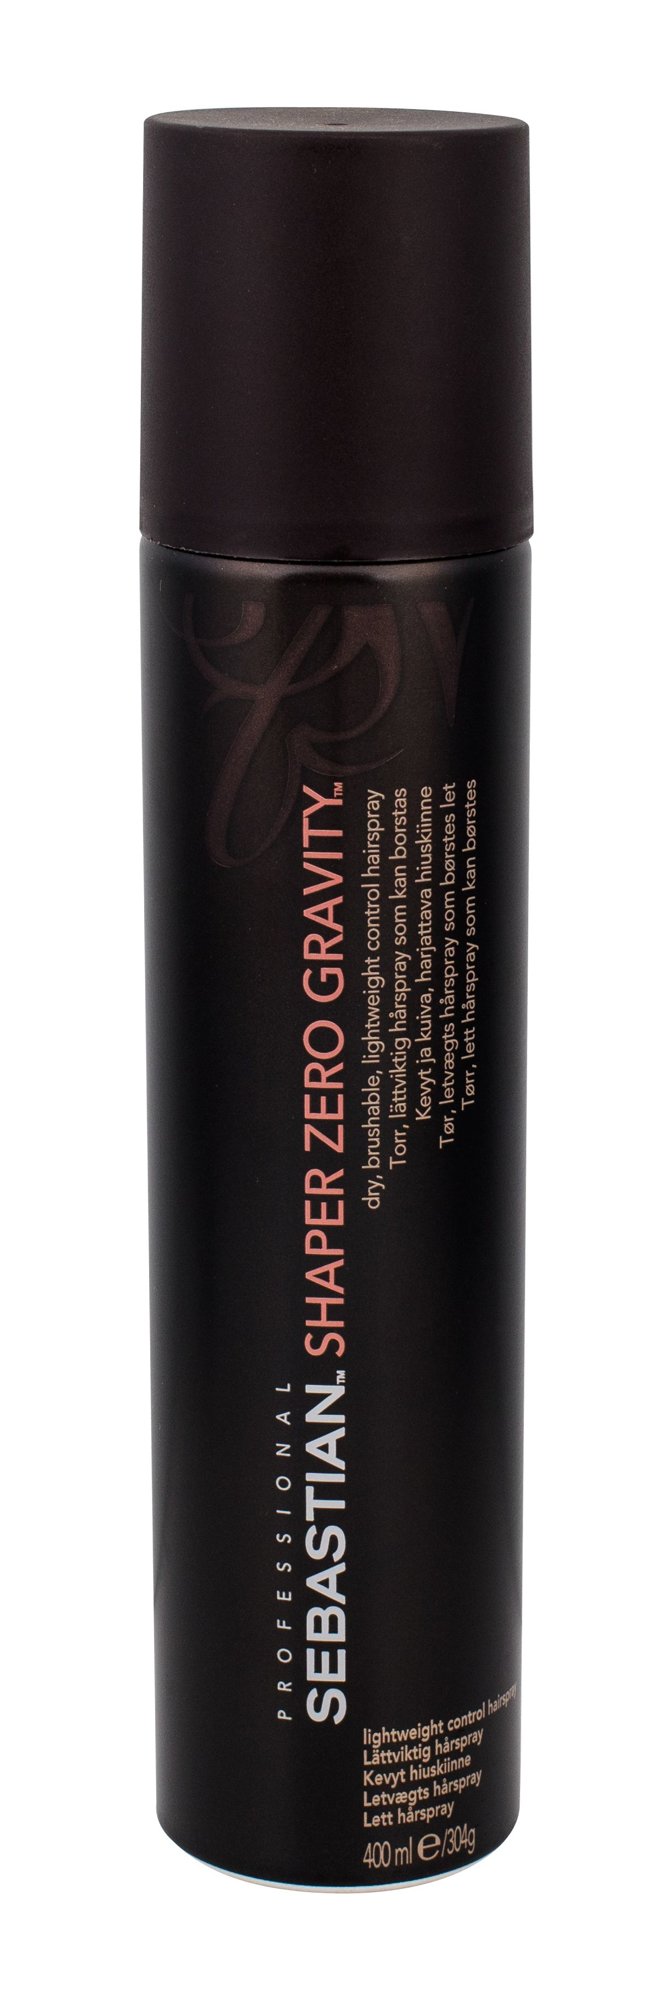 Sebastian Shaper Zero Gravity Hairspray